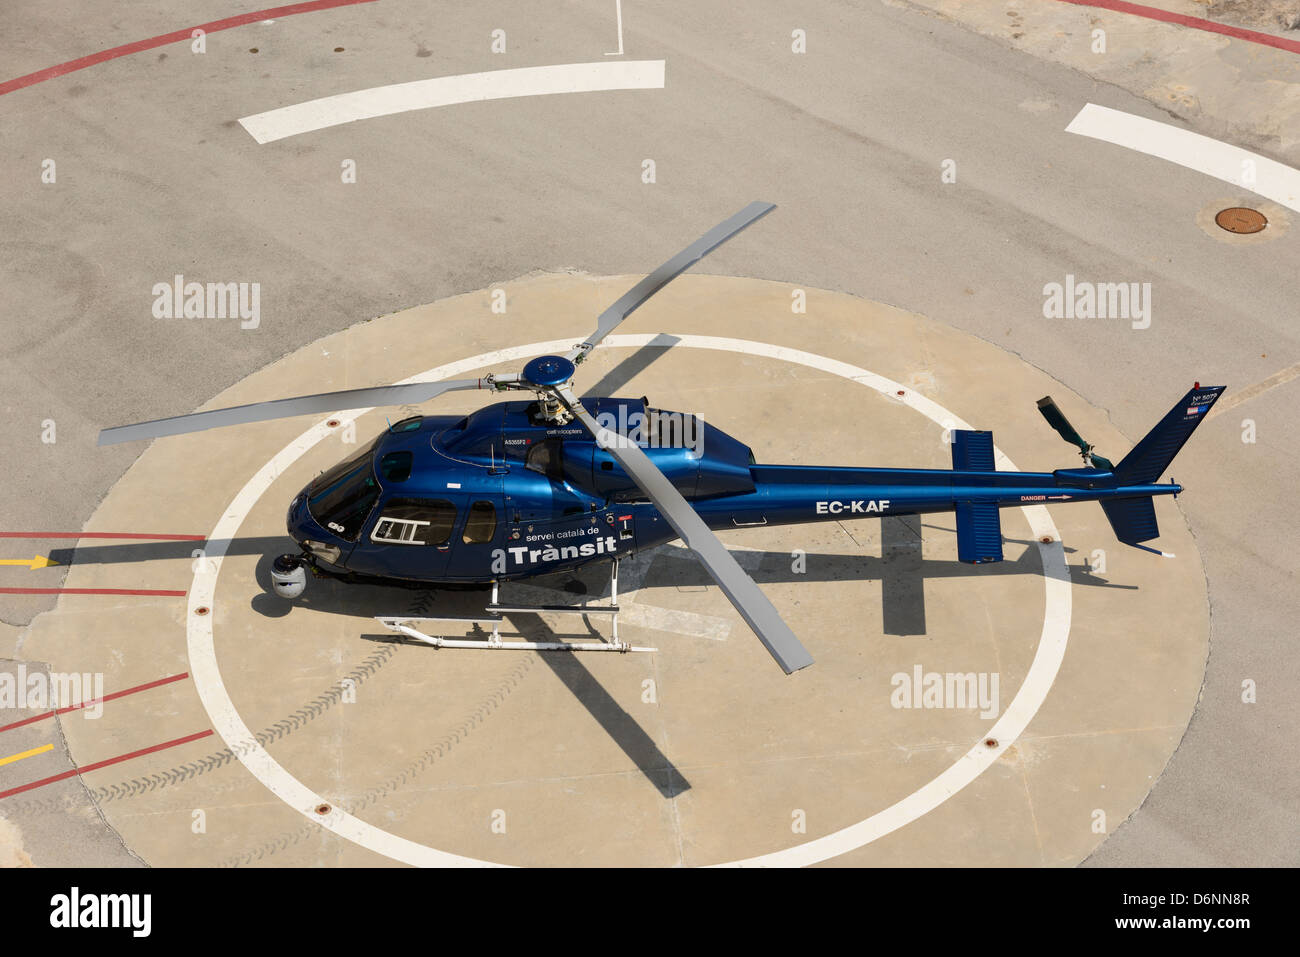 AS355 Ecureuil 2 (Twin Eichhörnchen) Hubschrauber von Aérospatiale, (Eurocopter Group) Servei Català de Trànsit gemacht. CAThelicopters Stockfoto